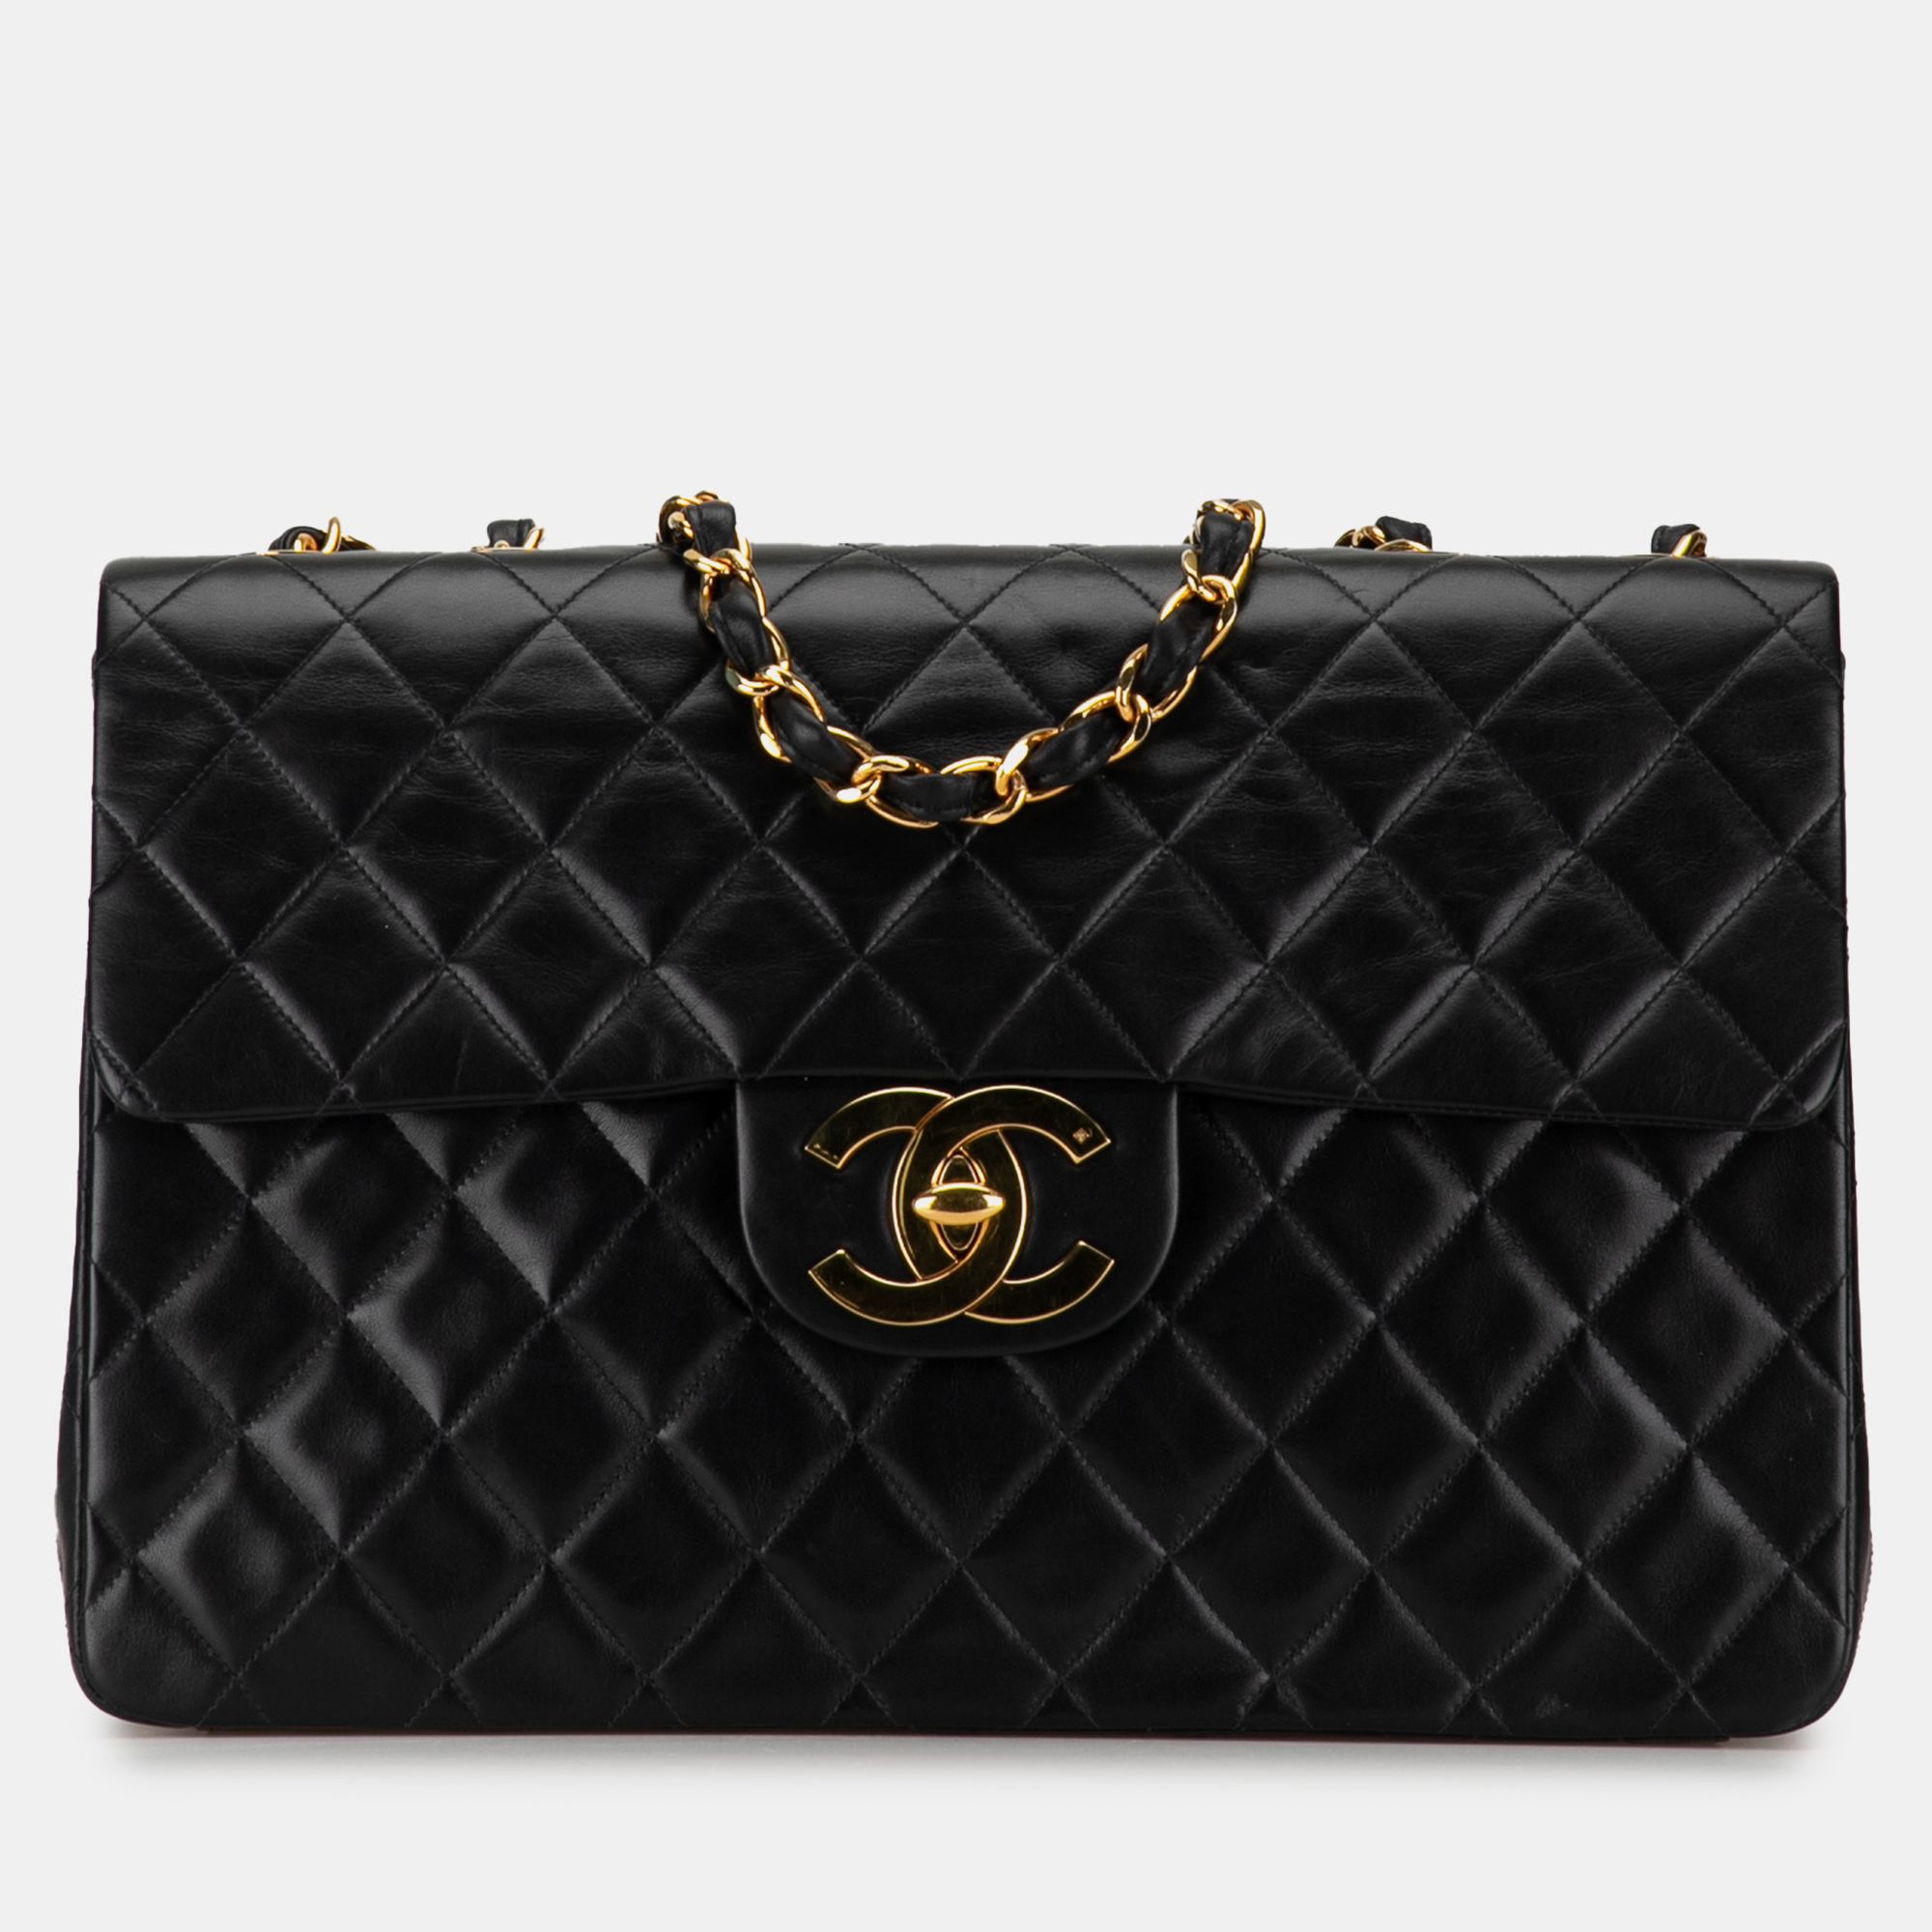 Chanel maxi xl classic lambskin single flap bag